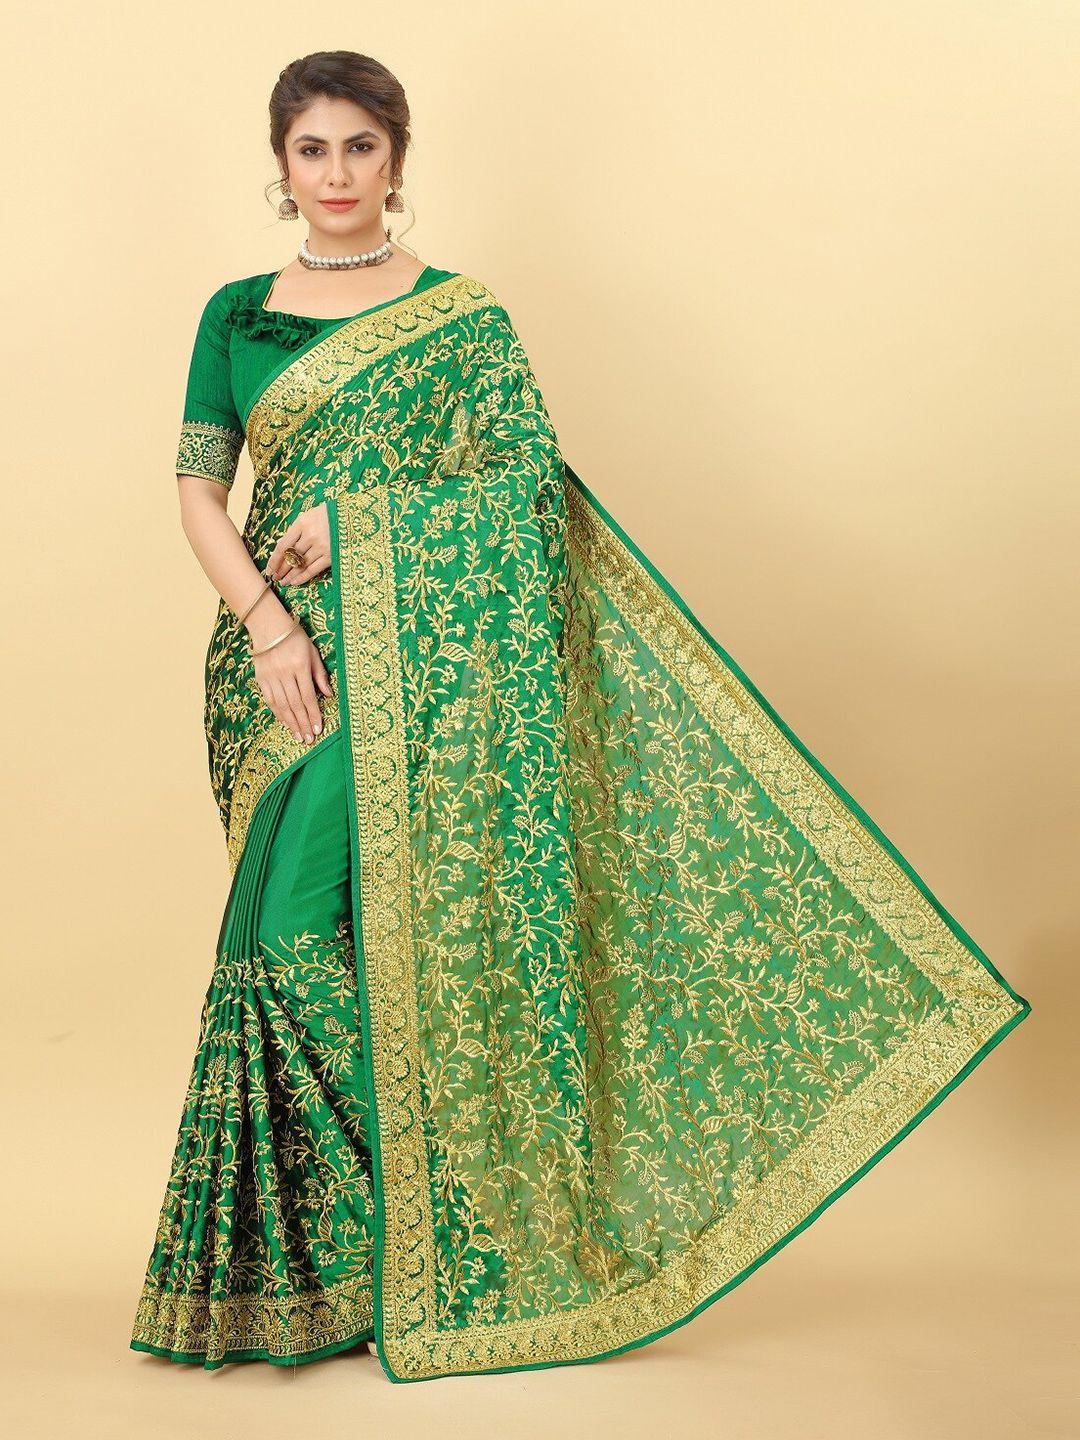 kalini green & gold-toned ethnic motifs embroidered art silk saree